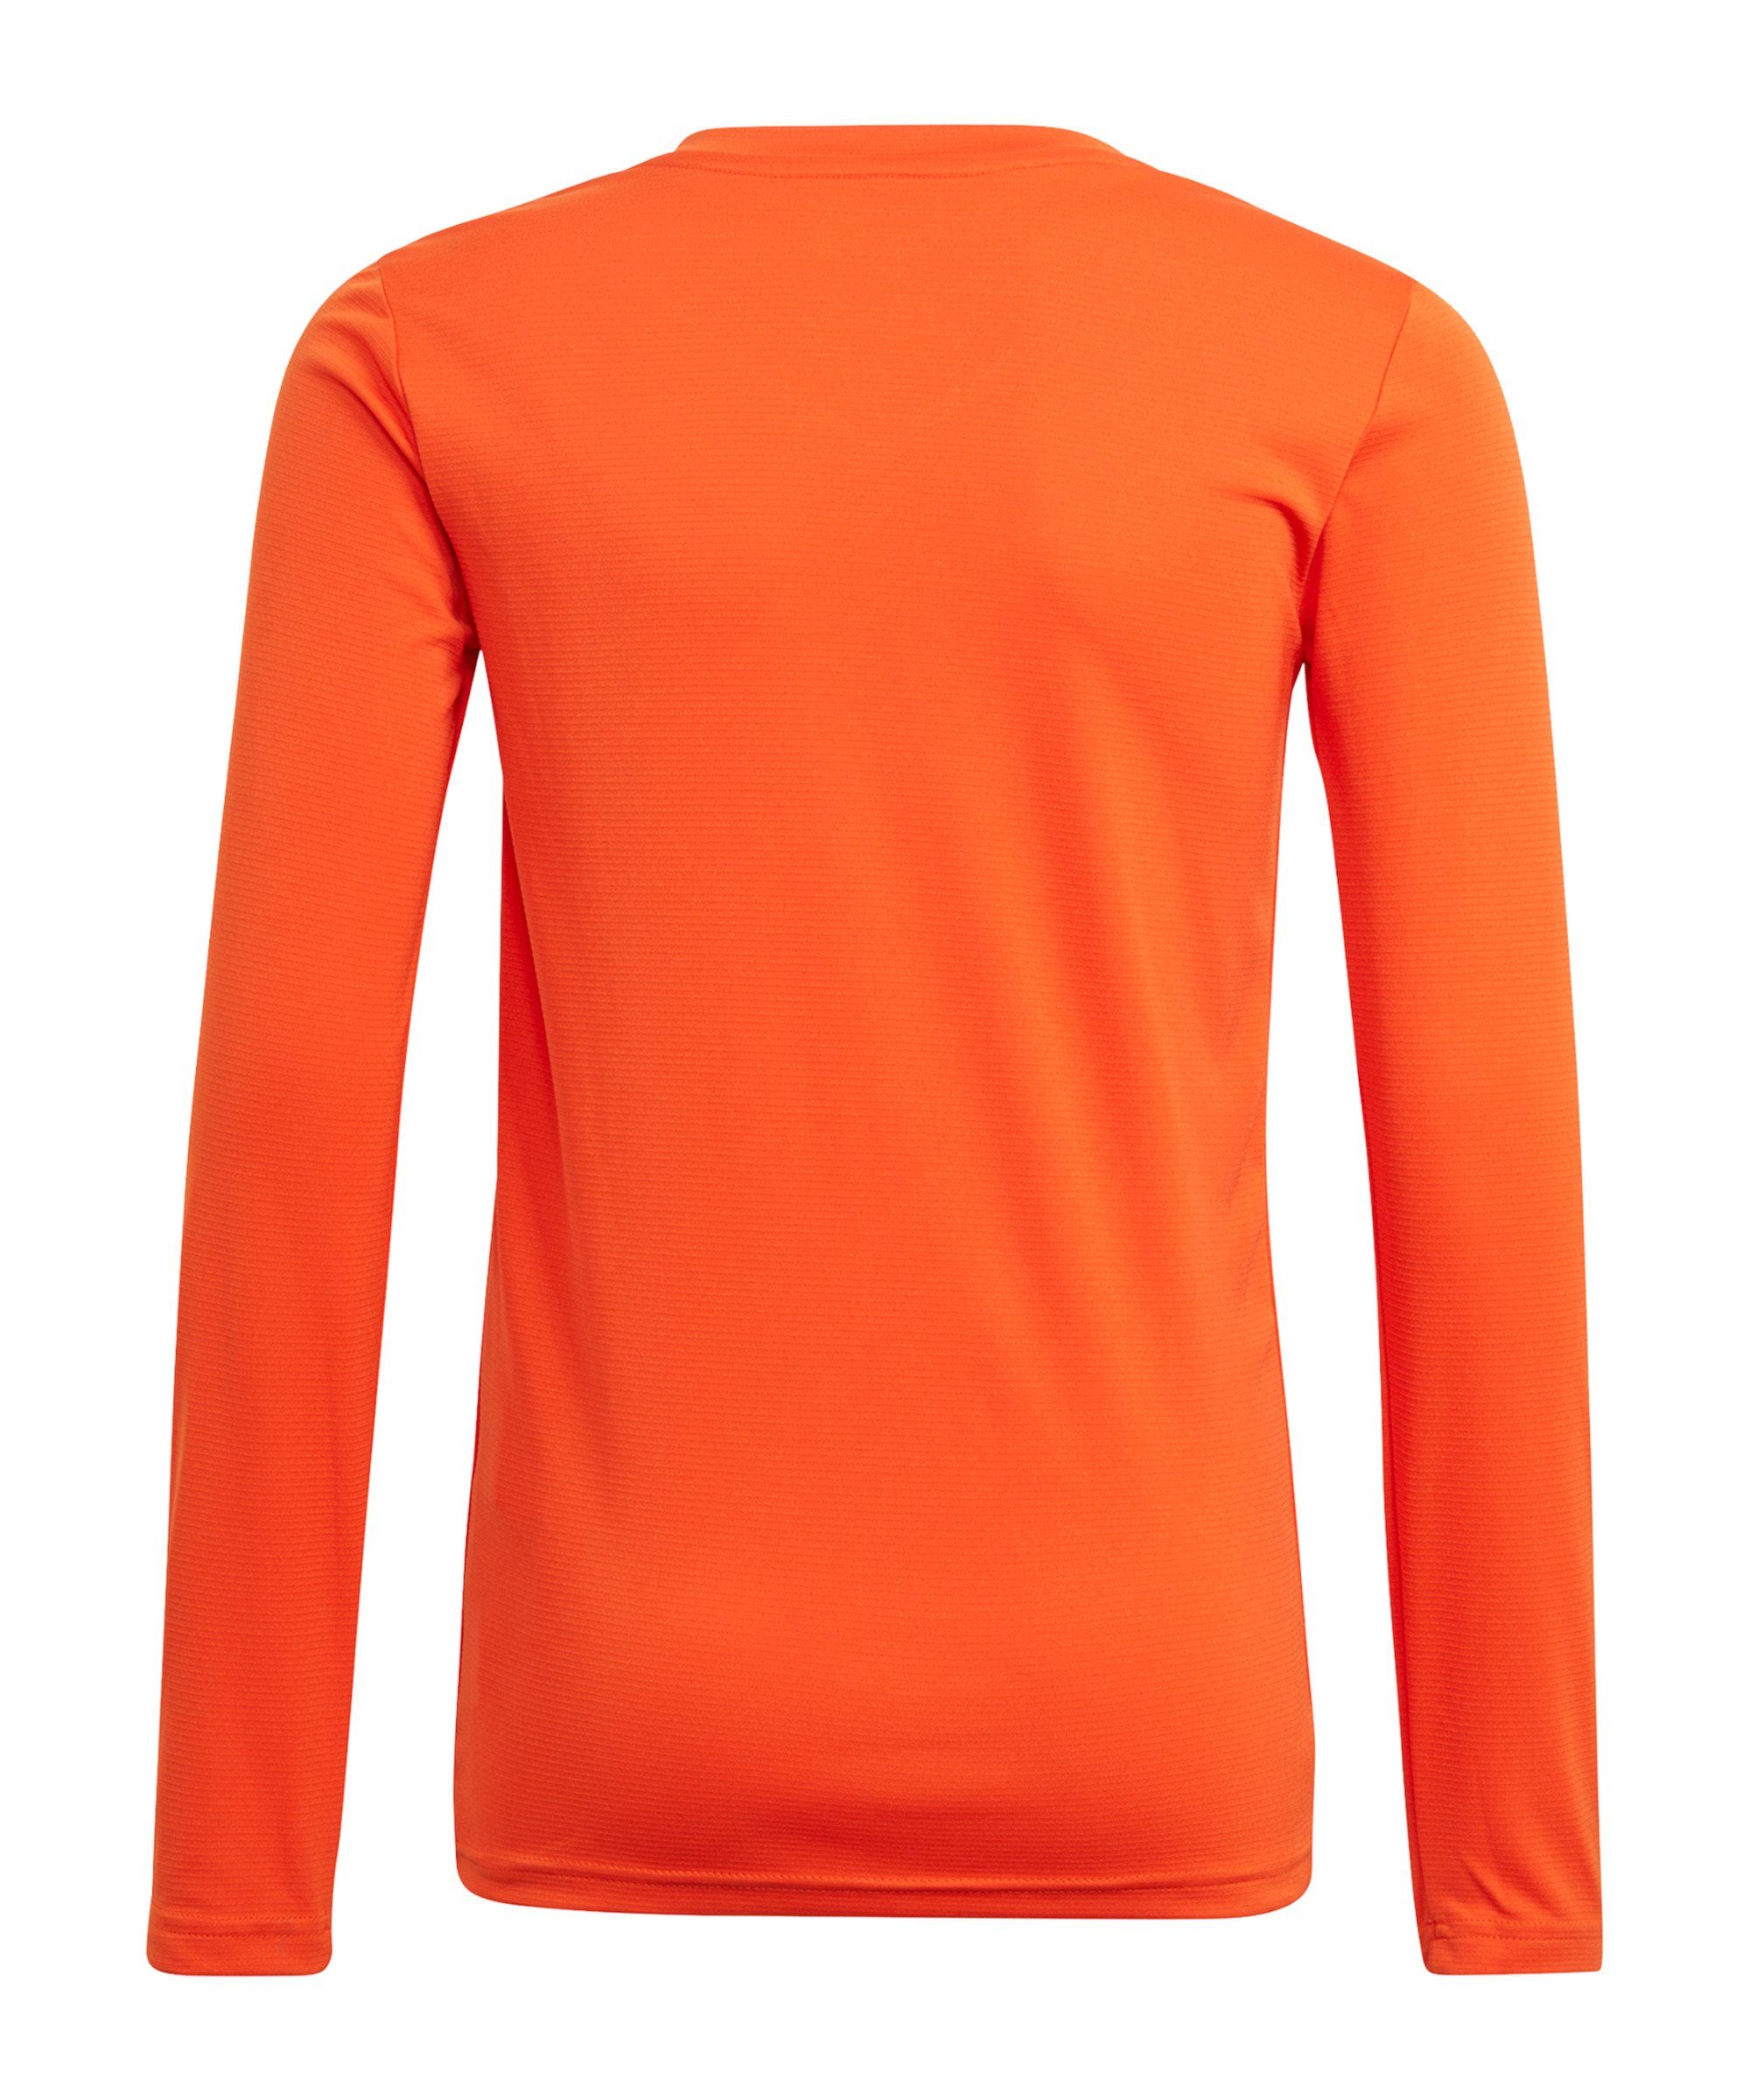 adidas langarm Funktionsshirt Top Team Performance orange Base Dunkel Kids default